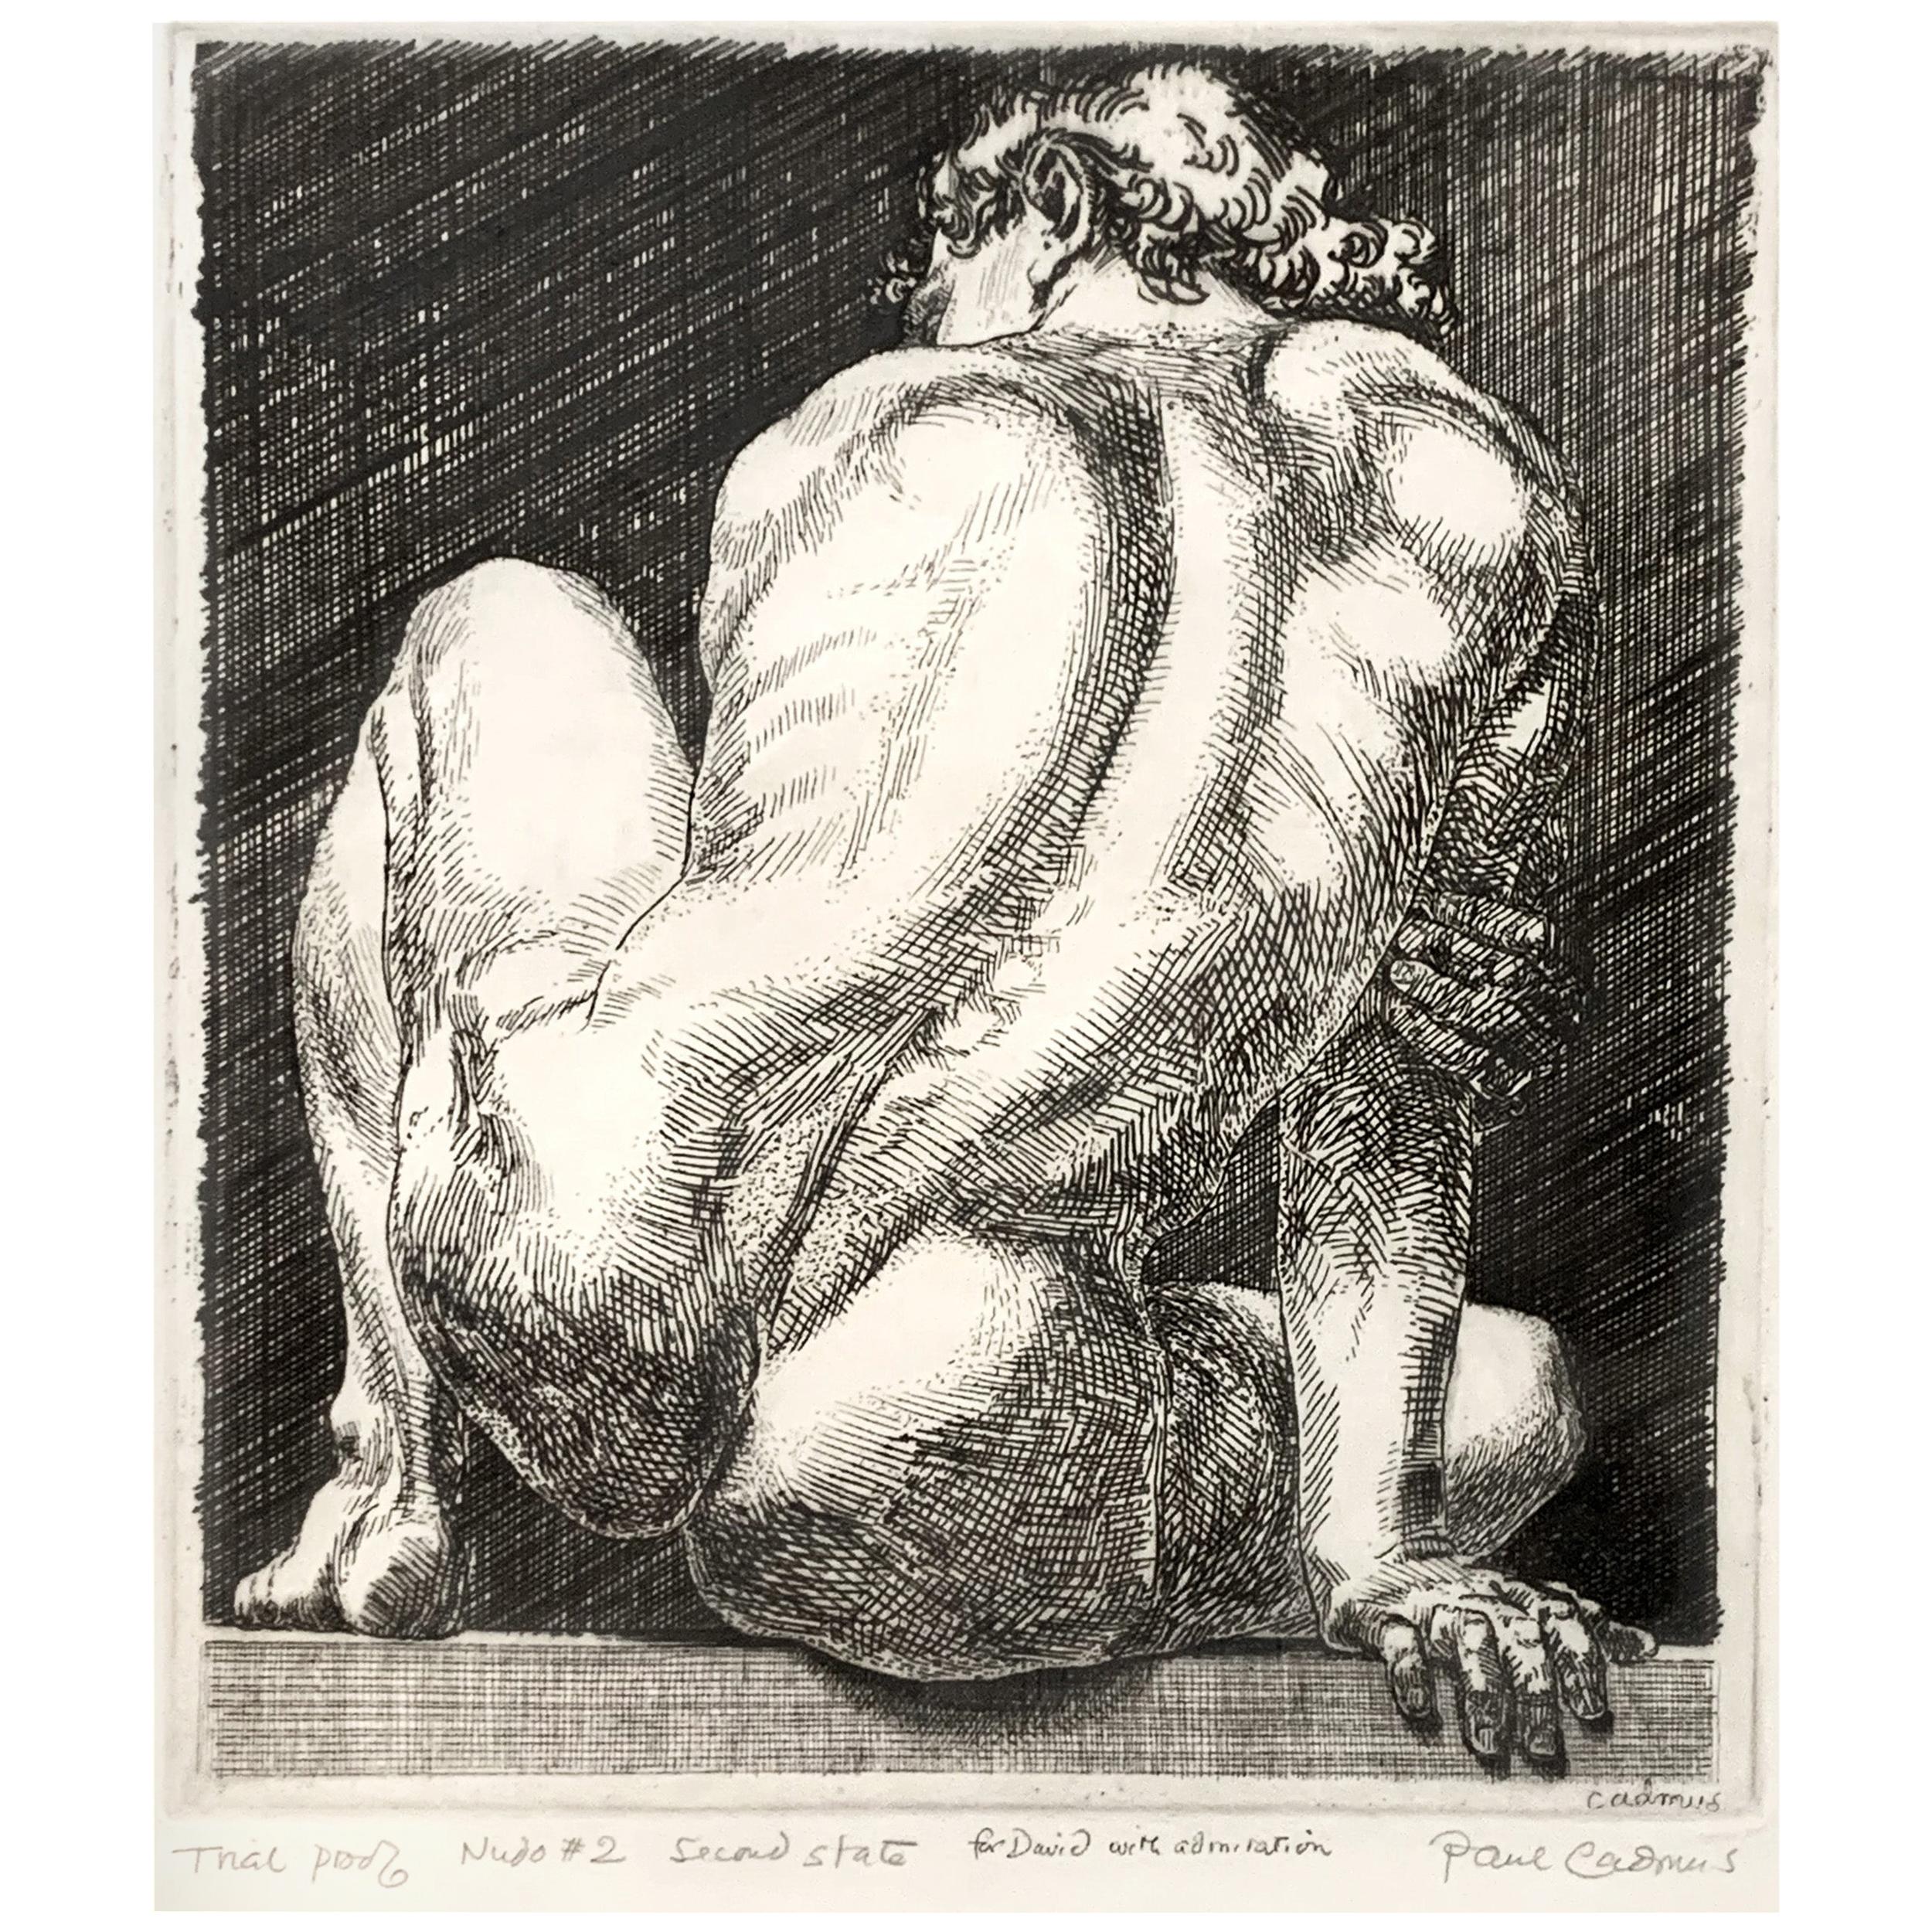 "Nudo #2, " Rare, Acclaimed Print with Male Nude by Paul Cadmus, Rare Dedication